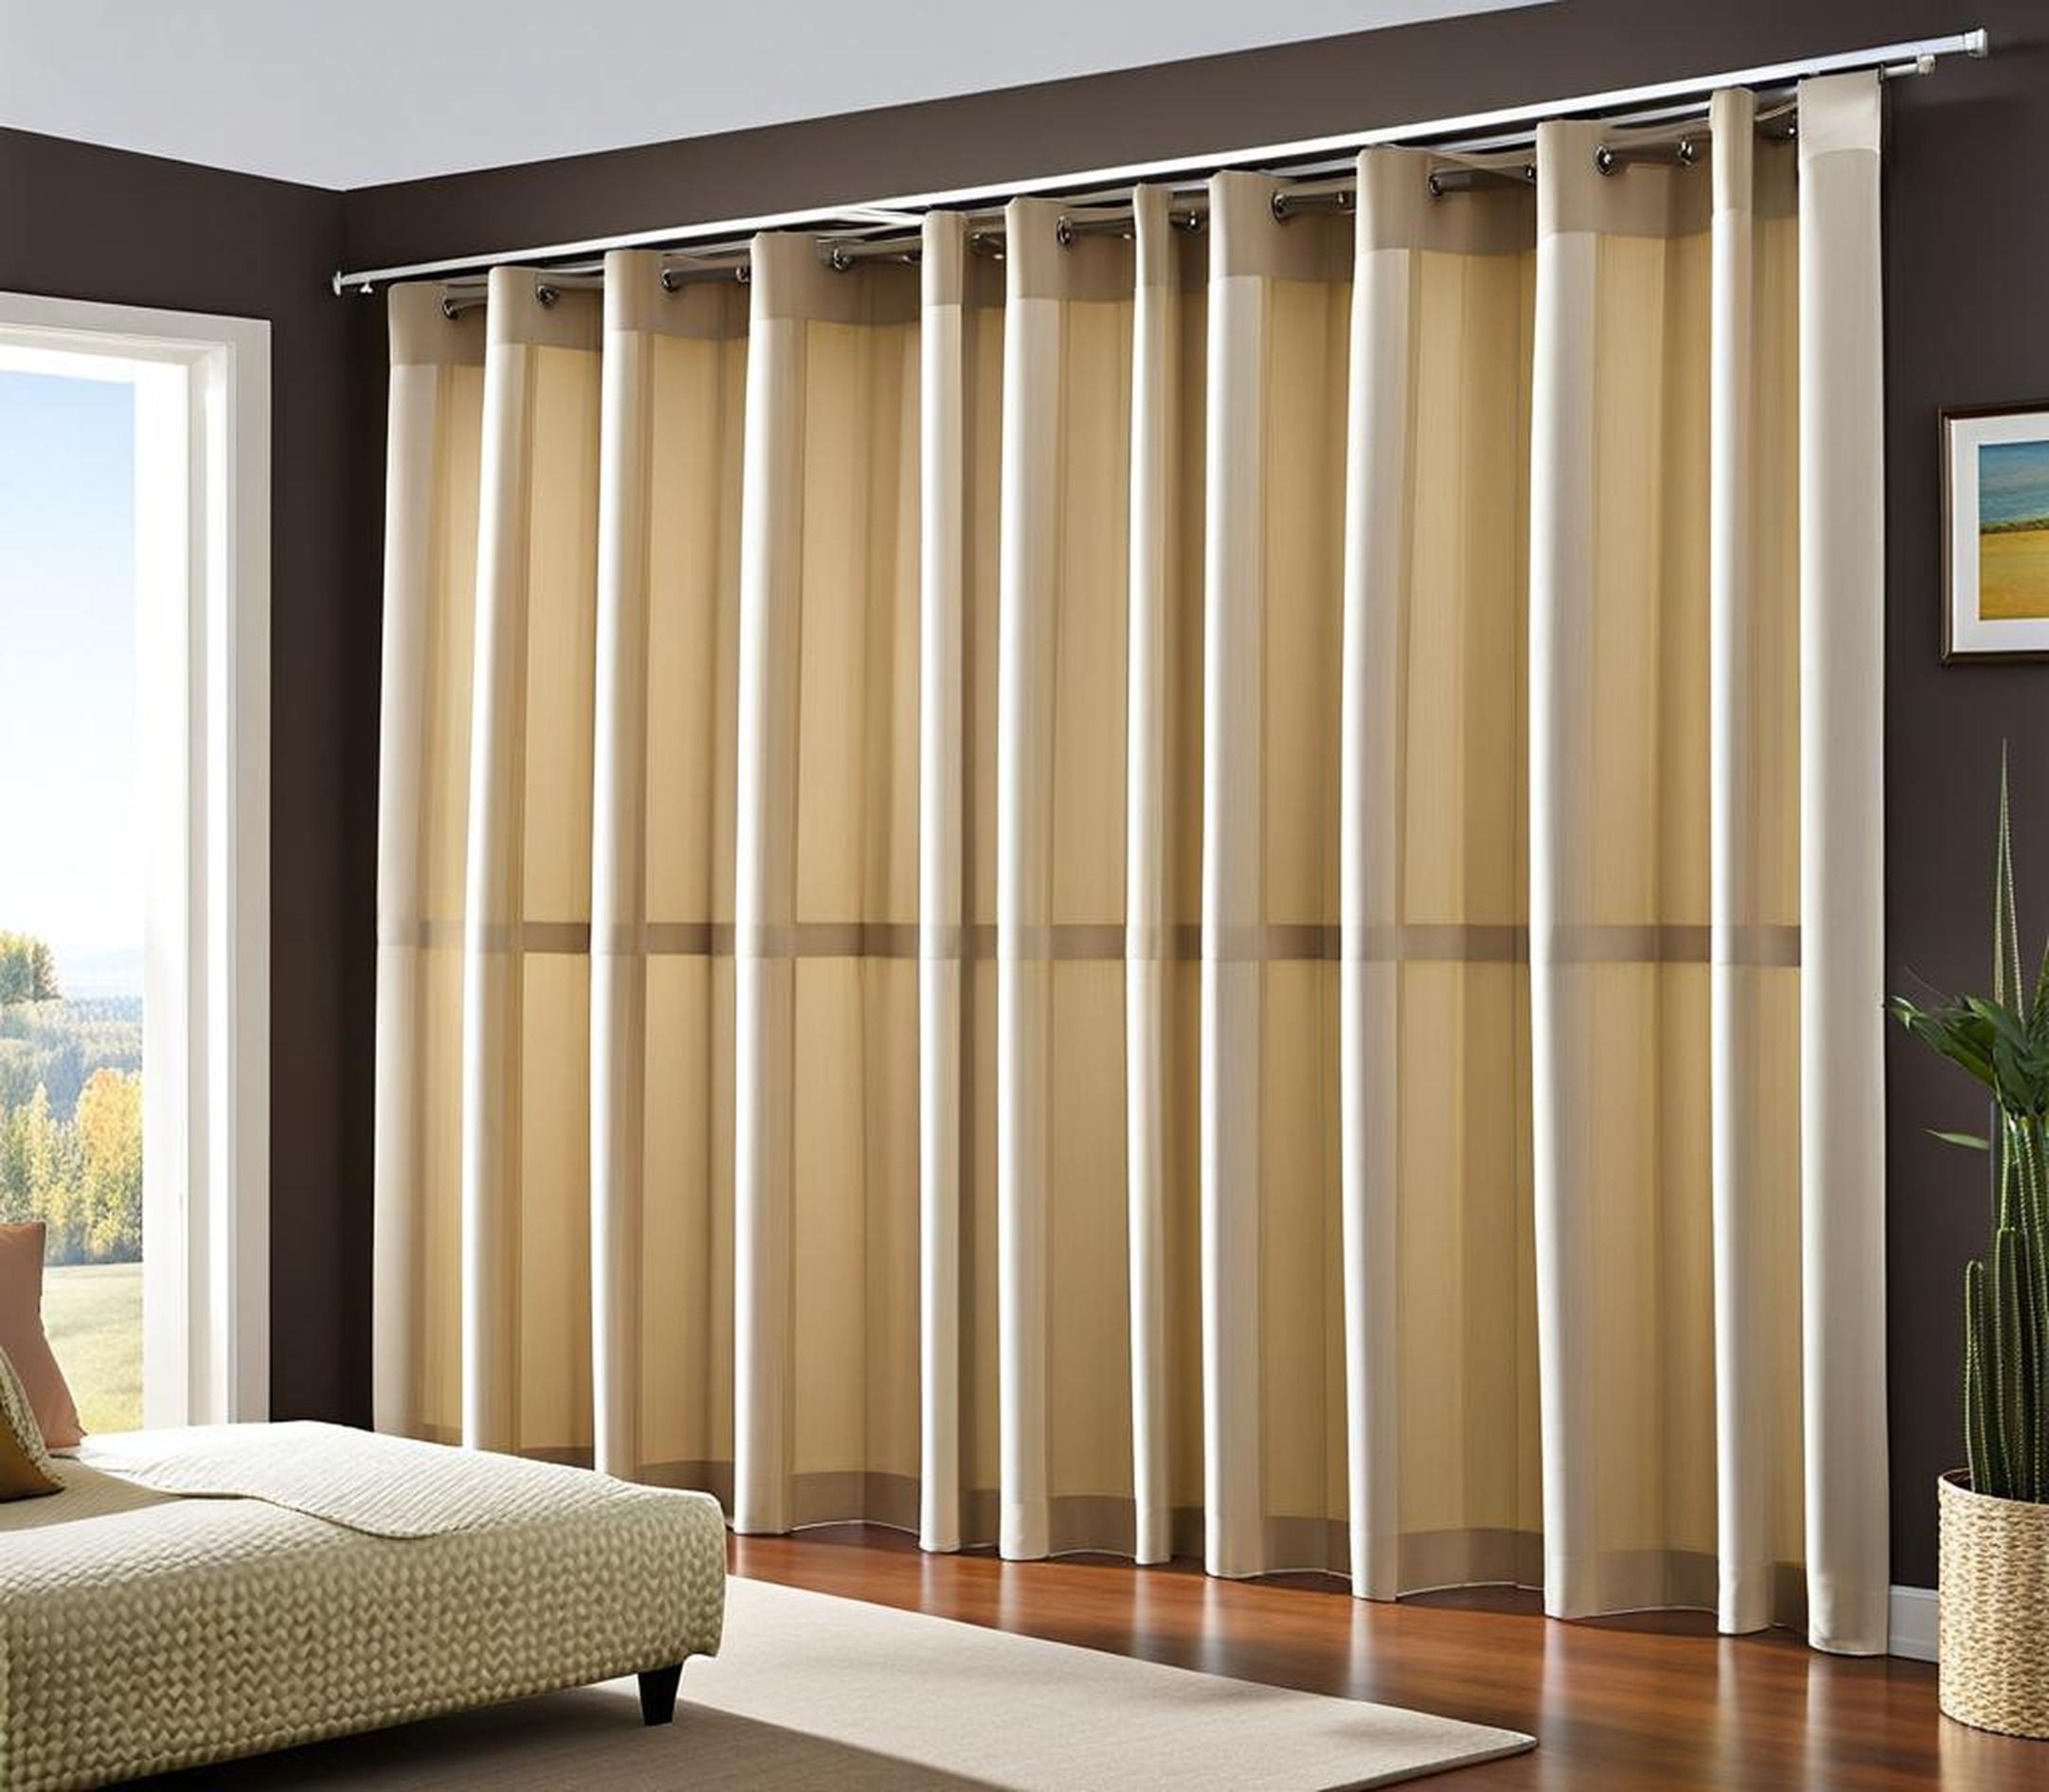 panel curtains for closet doors